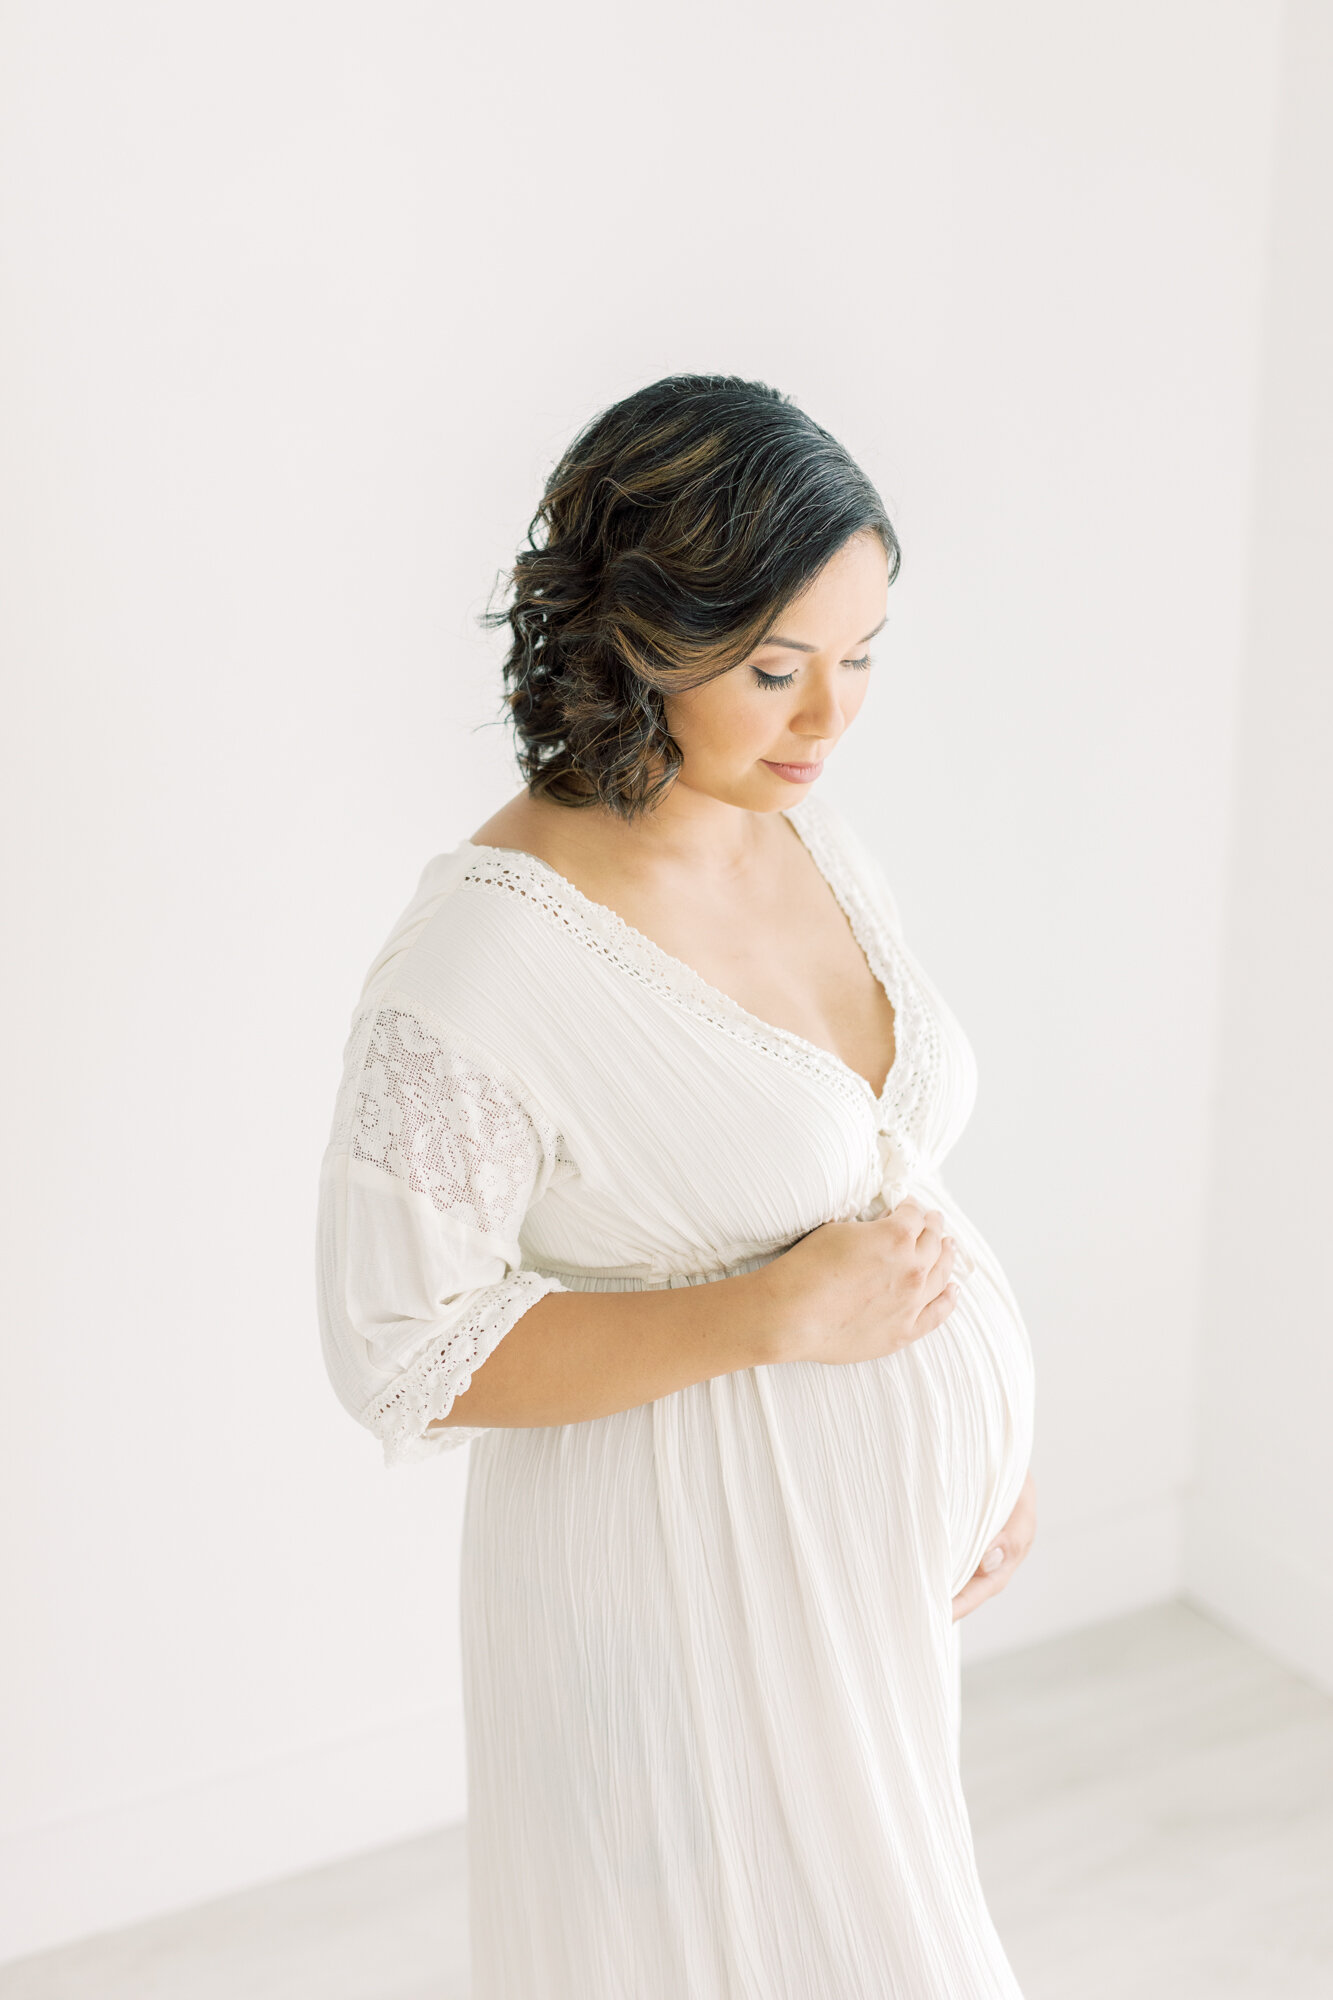 Malferrari Maternity 2021 - Kaitlynn Elliott Photography-4885.jpg